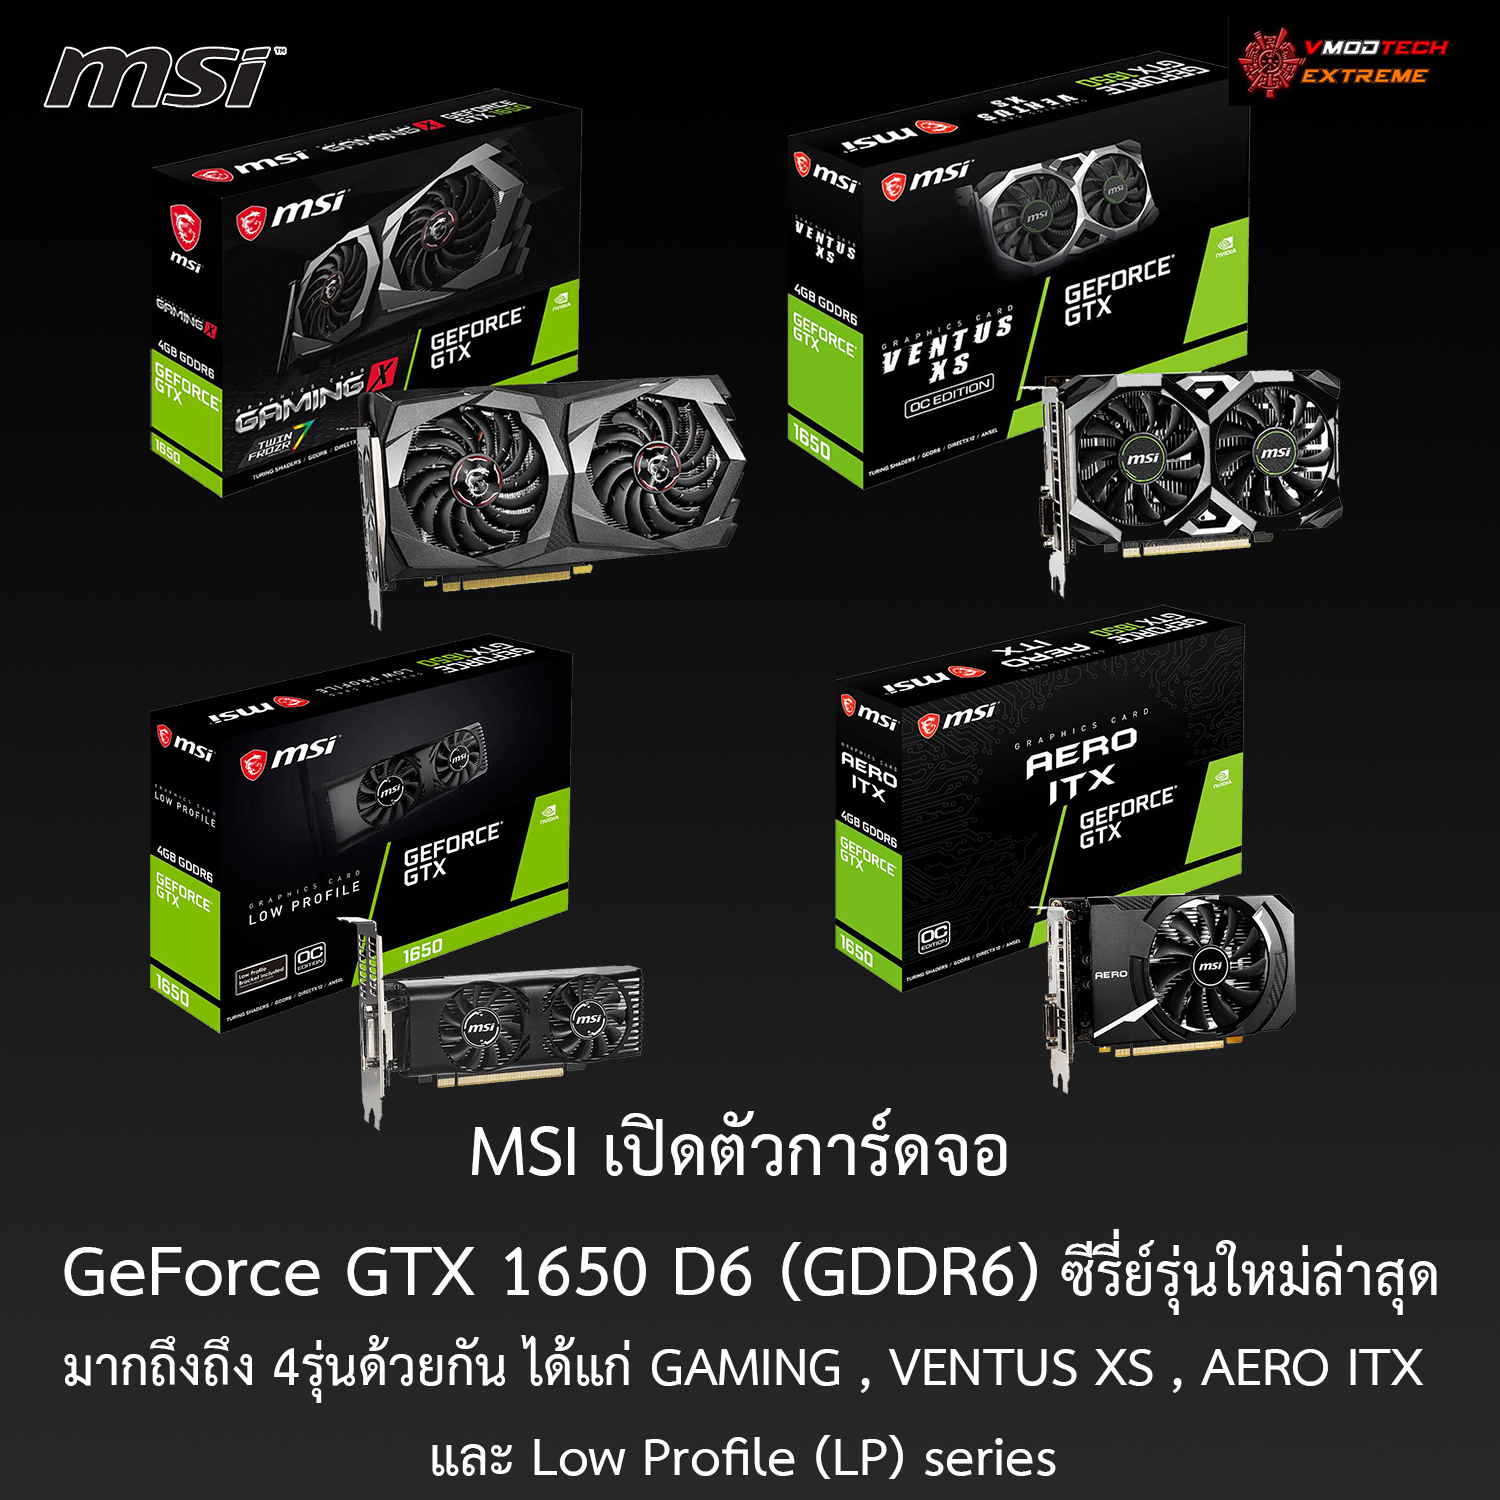 msi geforce gtx 1650 d6 gddr6 MSI เปิดตัวการ์ดจอ GeForce GTX 1650 D6 (GDDR6) ซีรี่ย์รุ่นใหม่ล่าสุดถึง 4รุ่นด้วยกัน